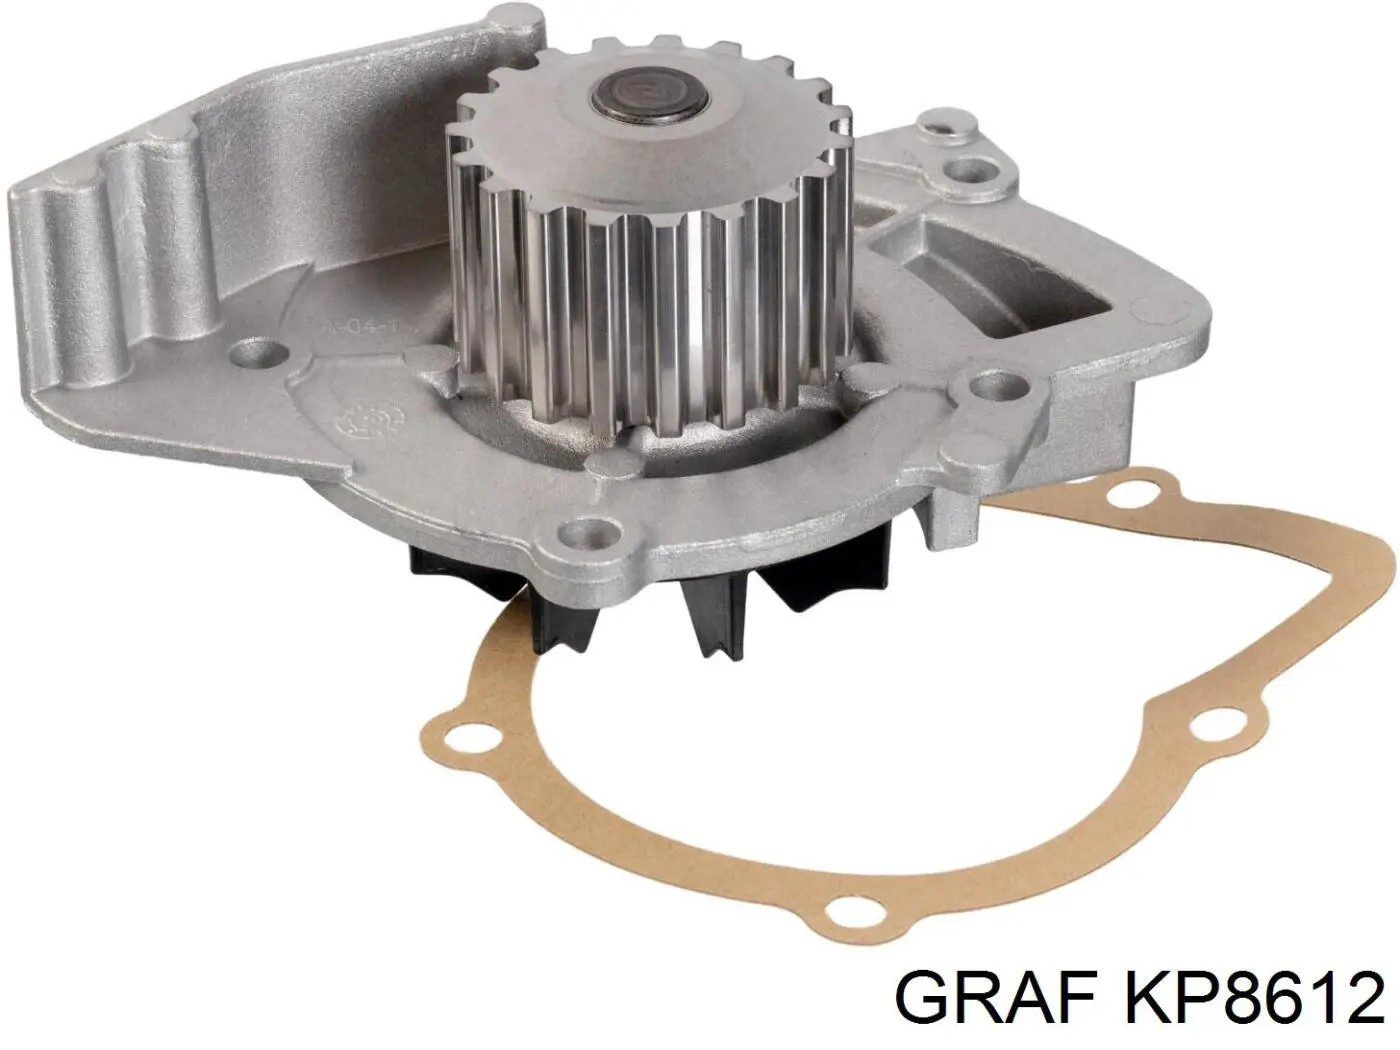 KP8612 Graf комплект грм